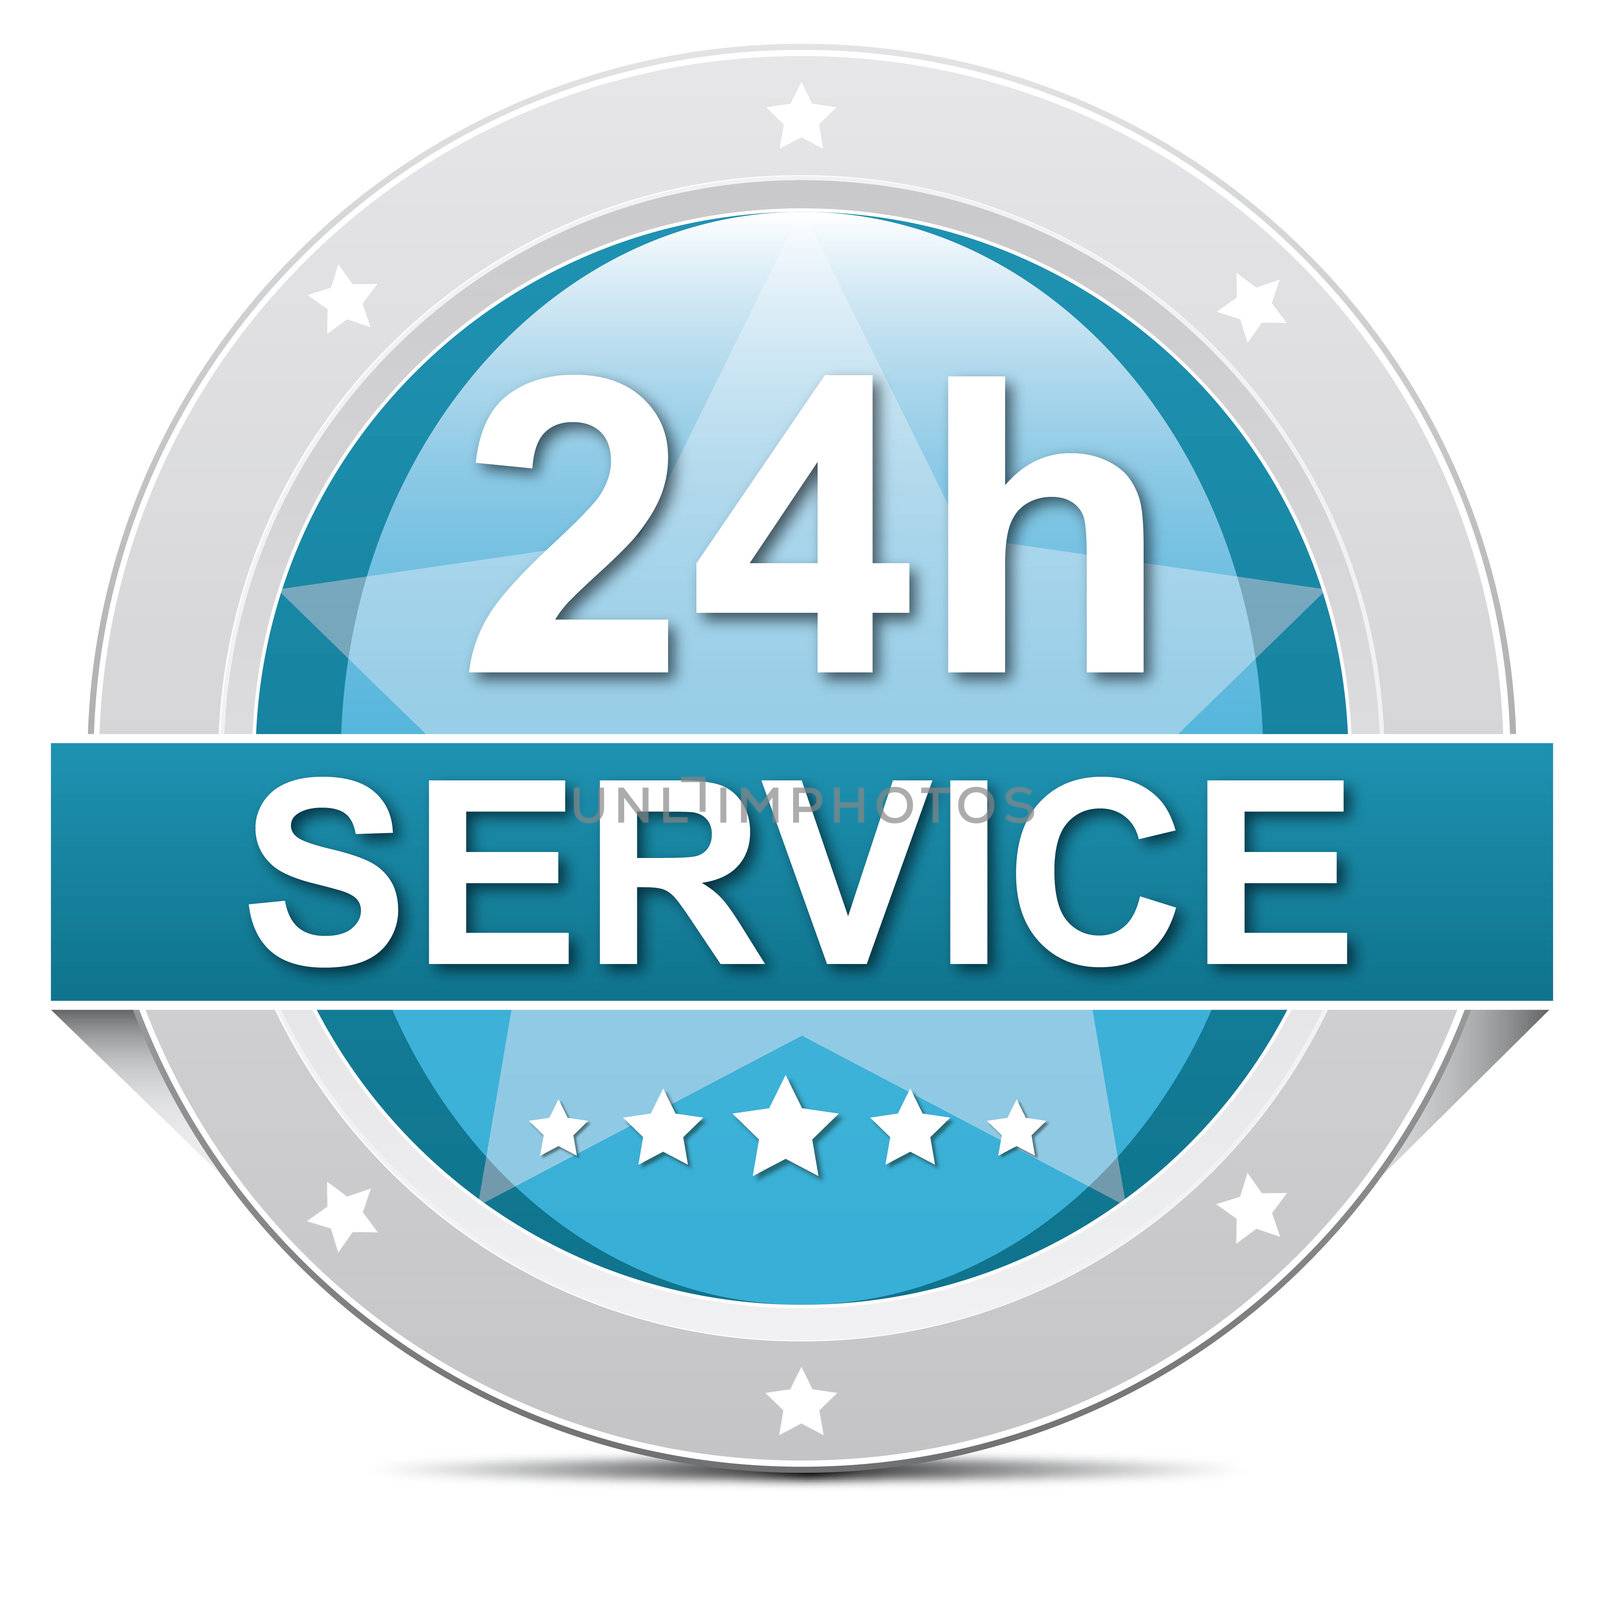 blue 24 hours 7 days service button